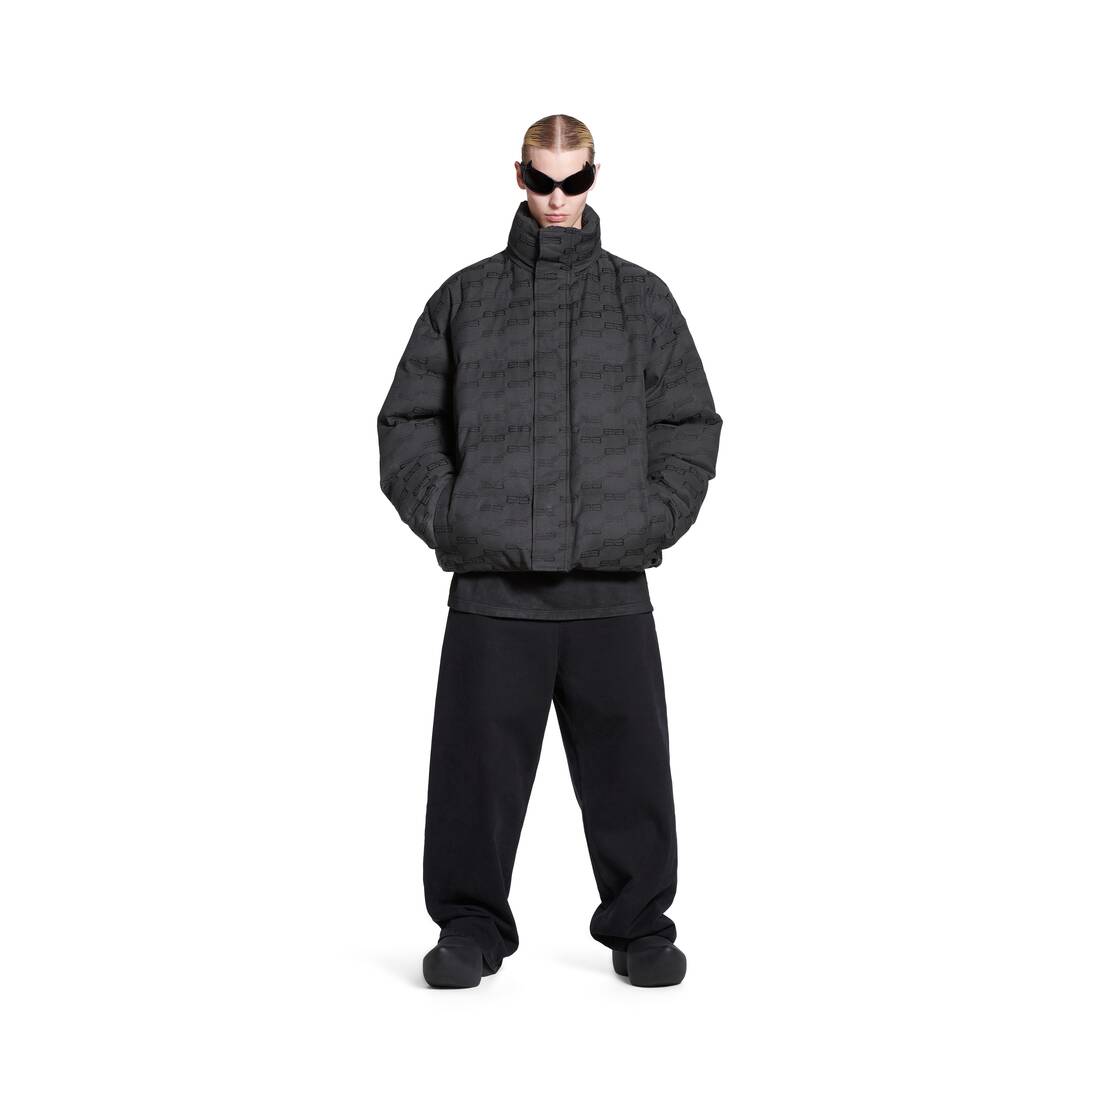 Balenciaga Men's Bb Monogram Puffer Jacket - Black - Size 38